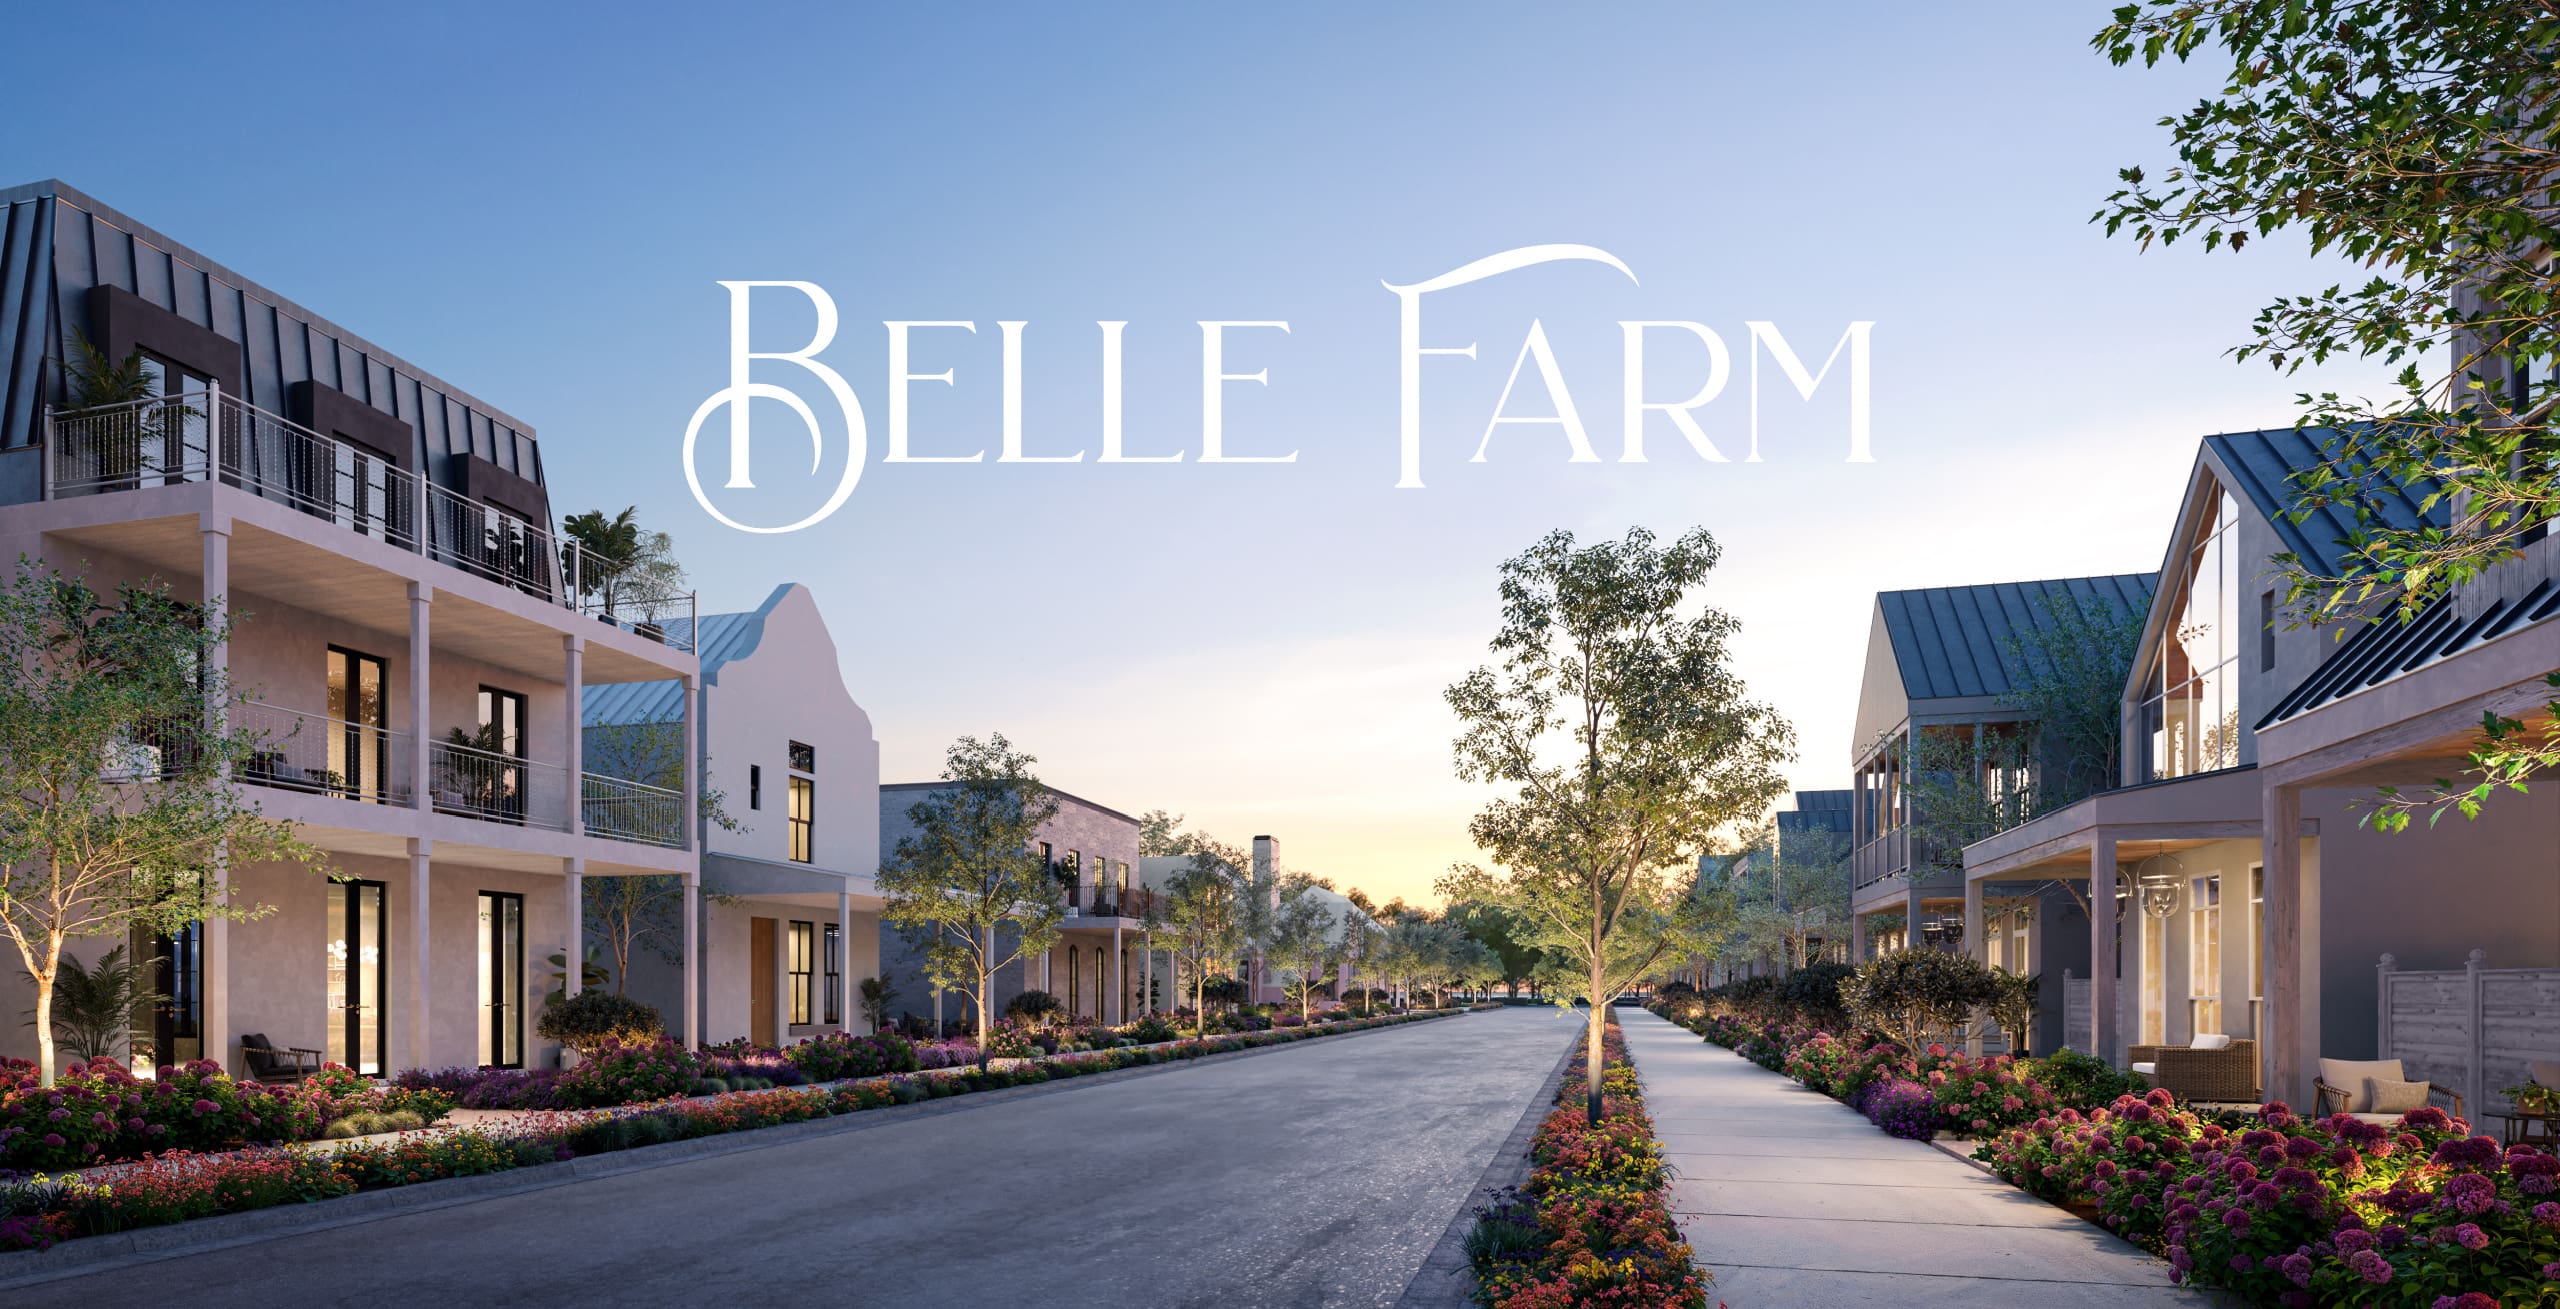 Belle Farm